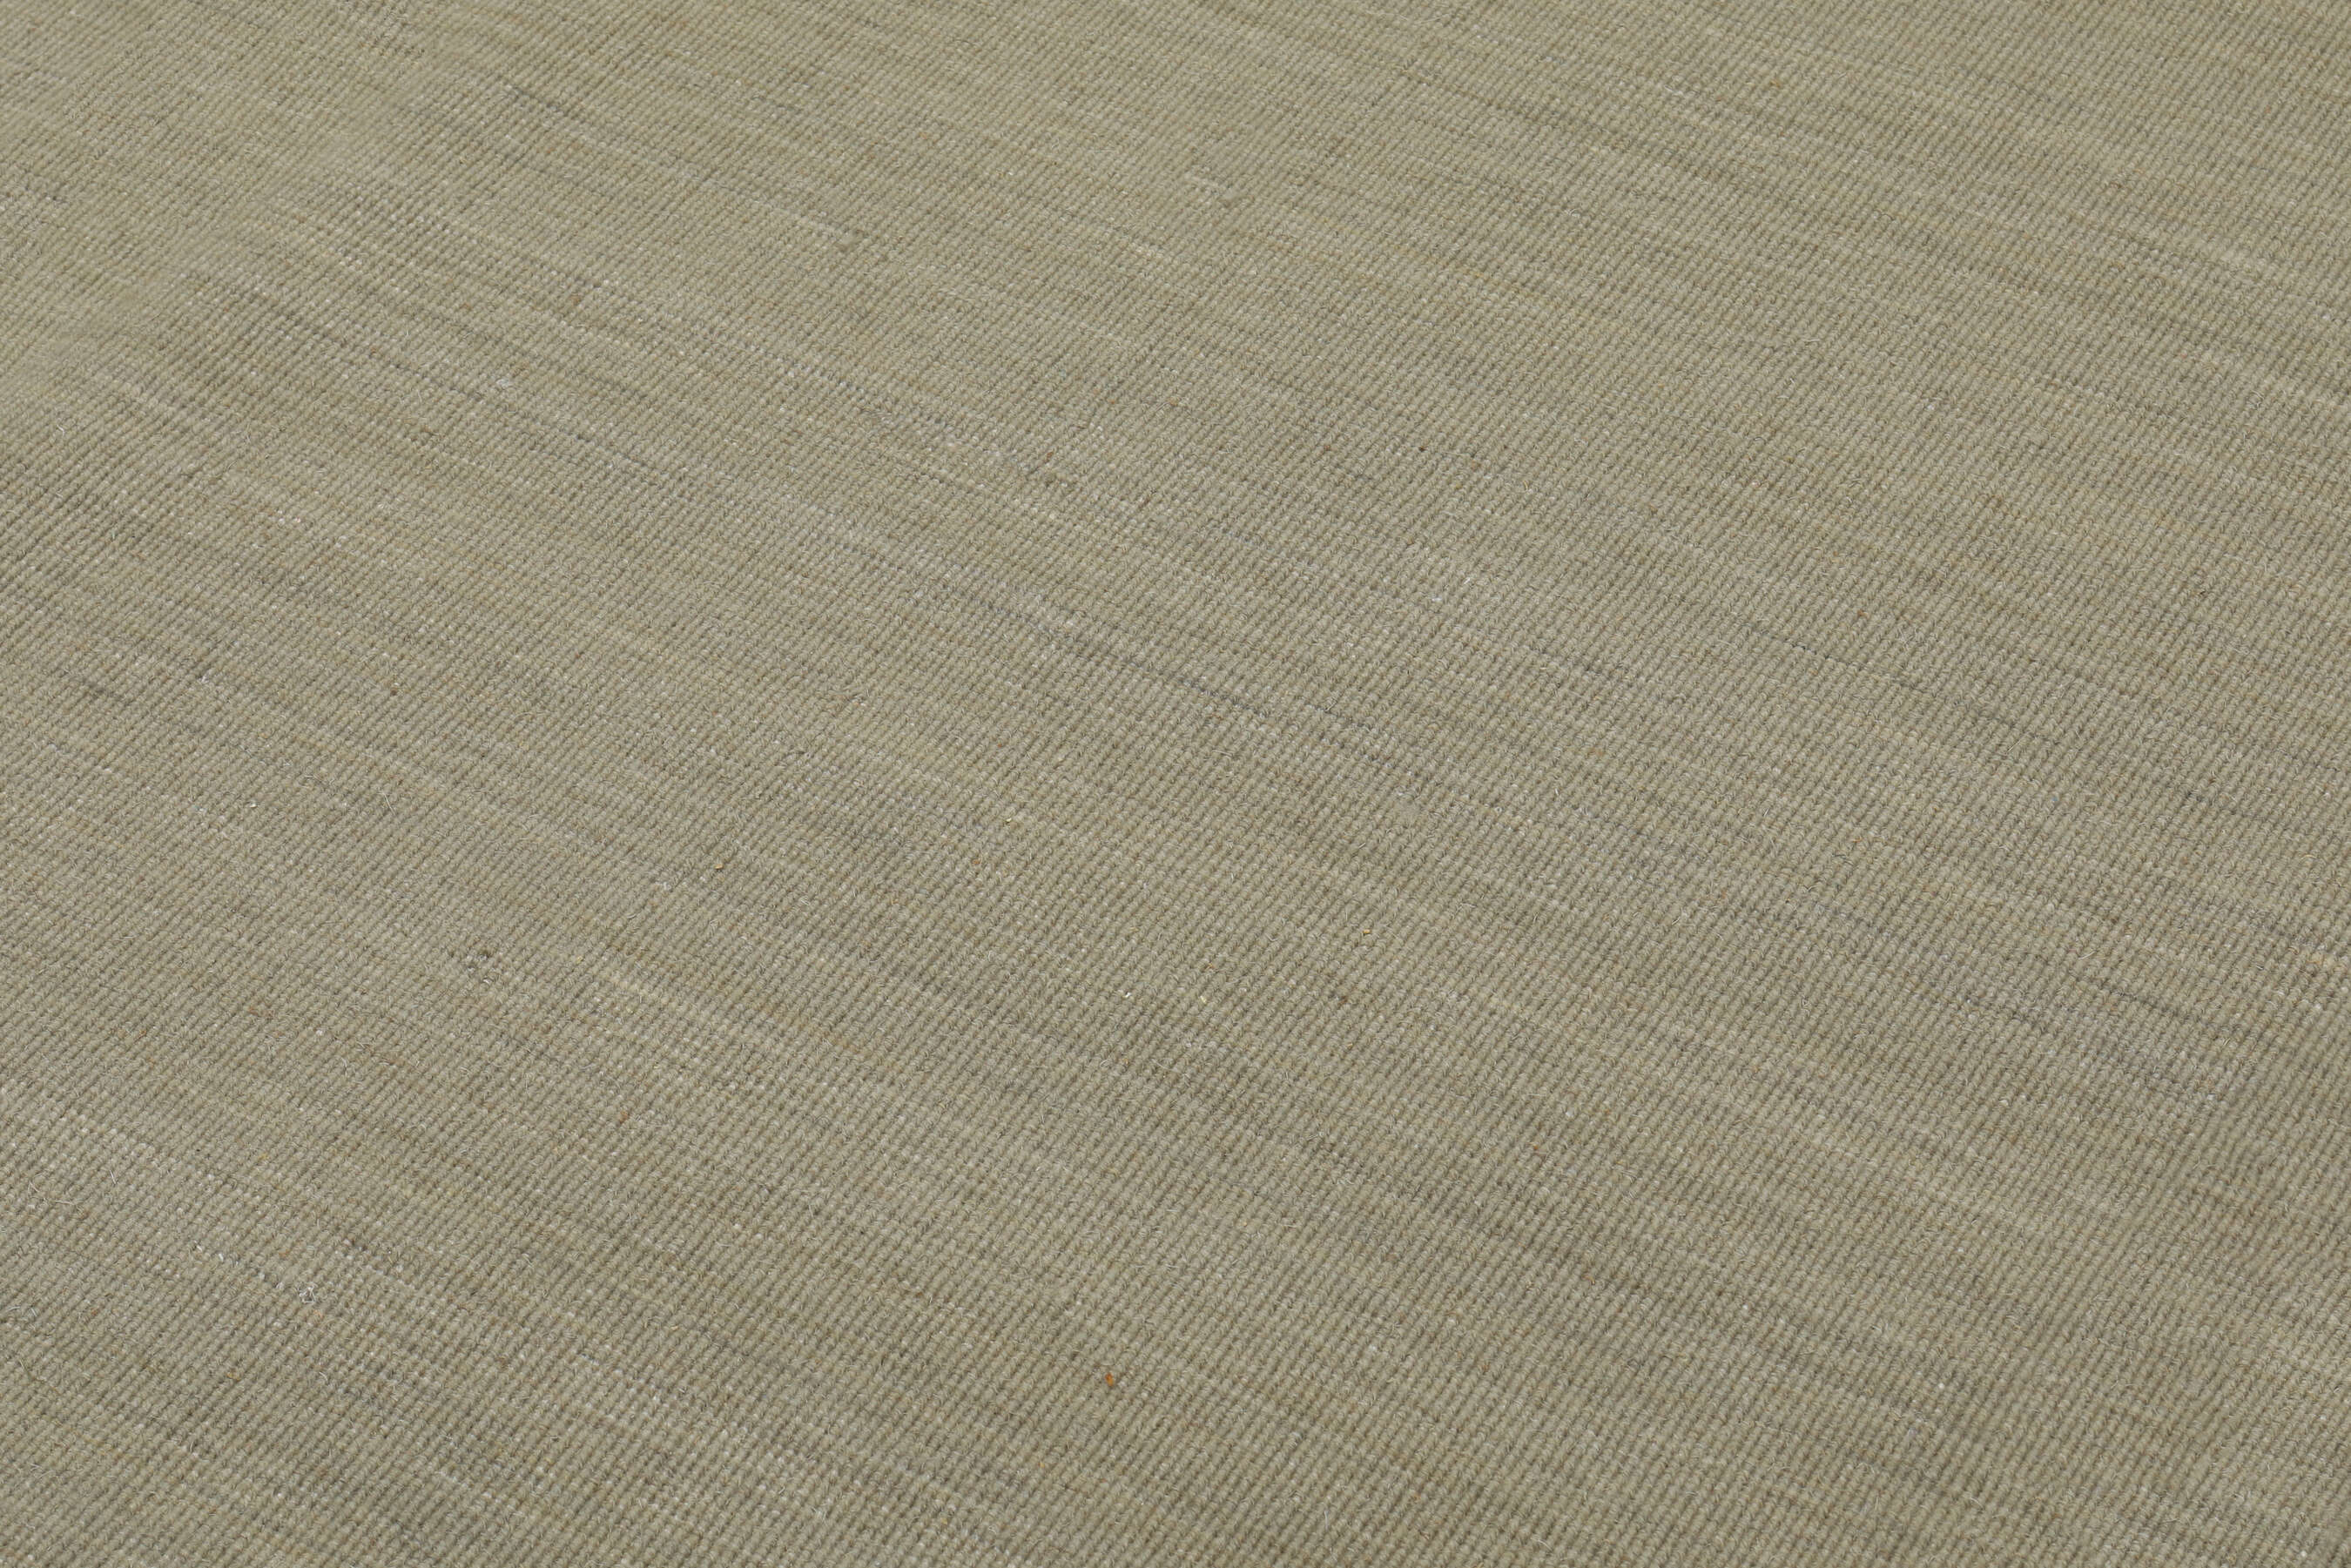 
    Kilim loom - Light grey / Beige - 200 x 250 cm
  